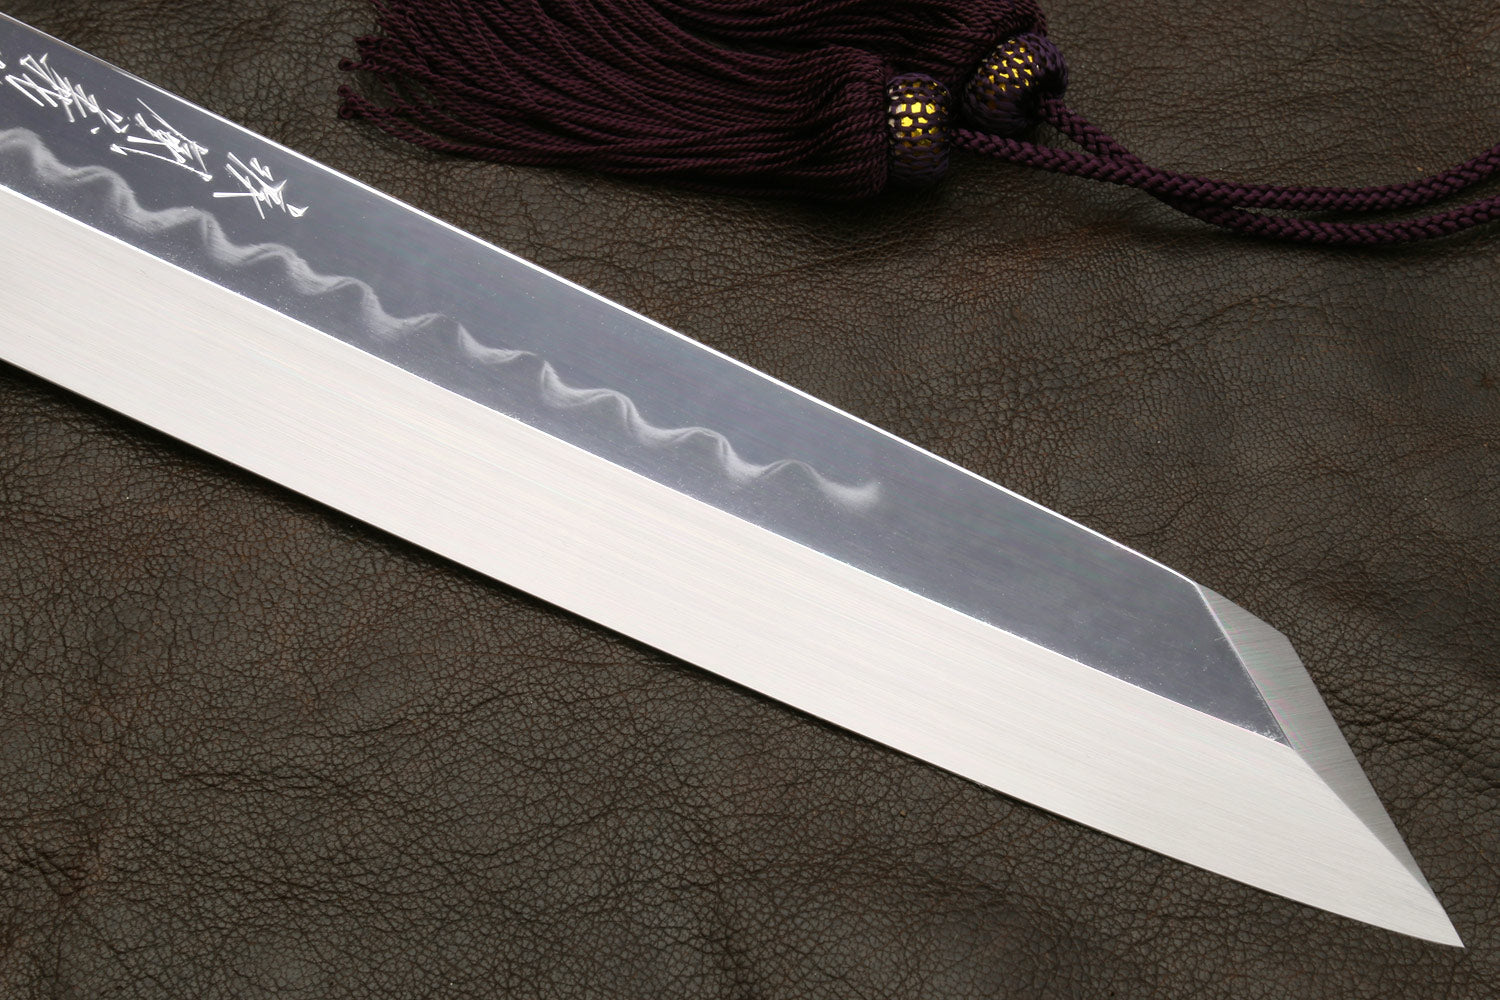 Kikusumi NATUR Sakura 2 Knife Set – 8″ Kiritsuke Gyuto Chef Knife